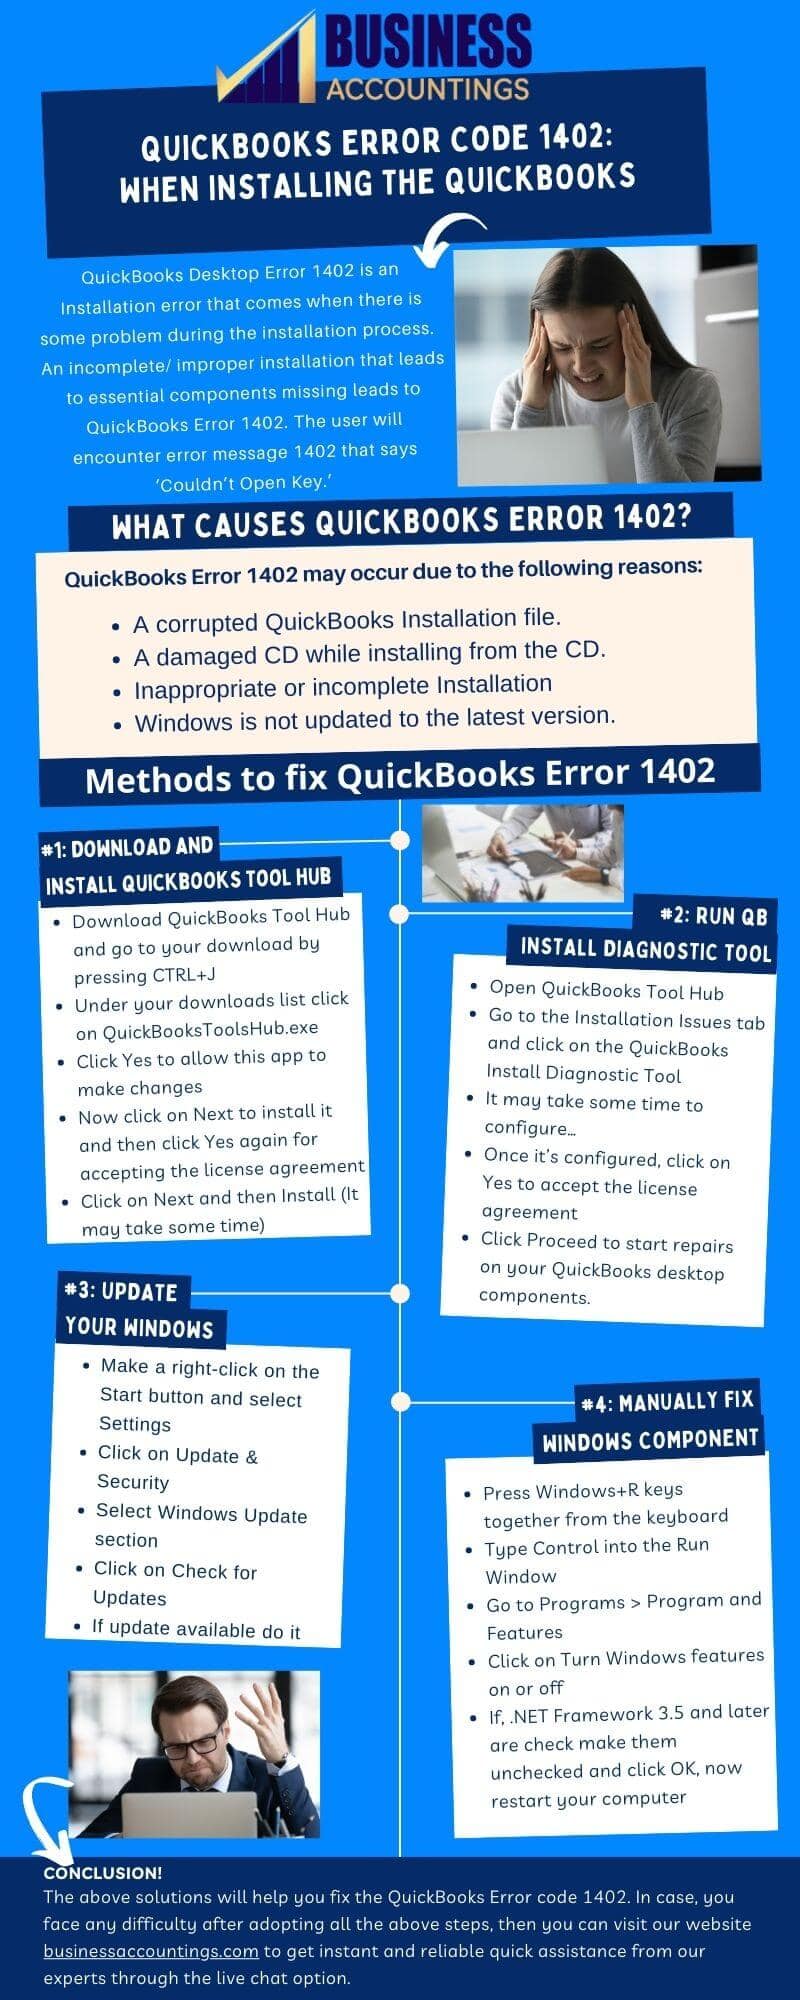 Infographic To Resolve QuickBooks Error Code 1402